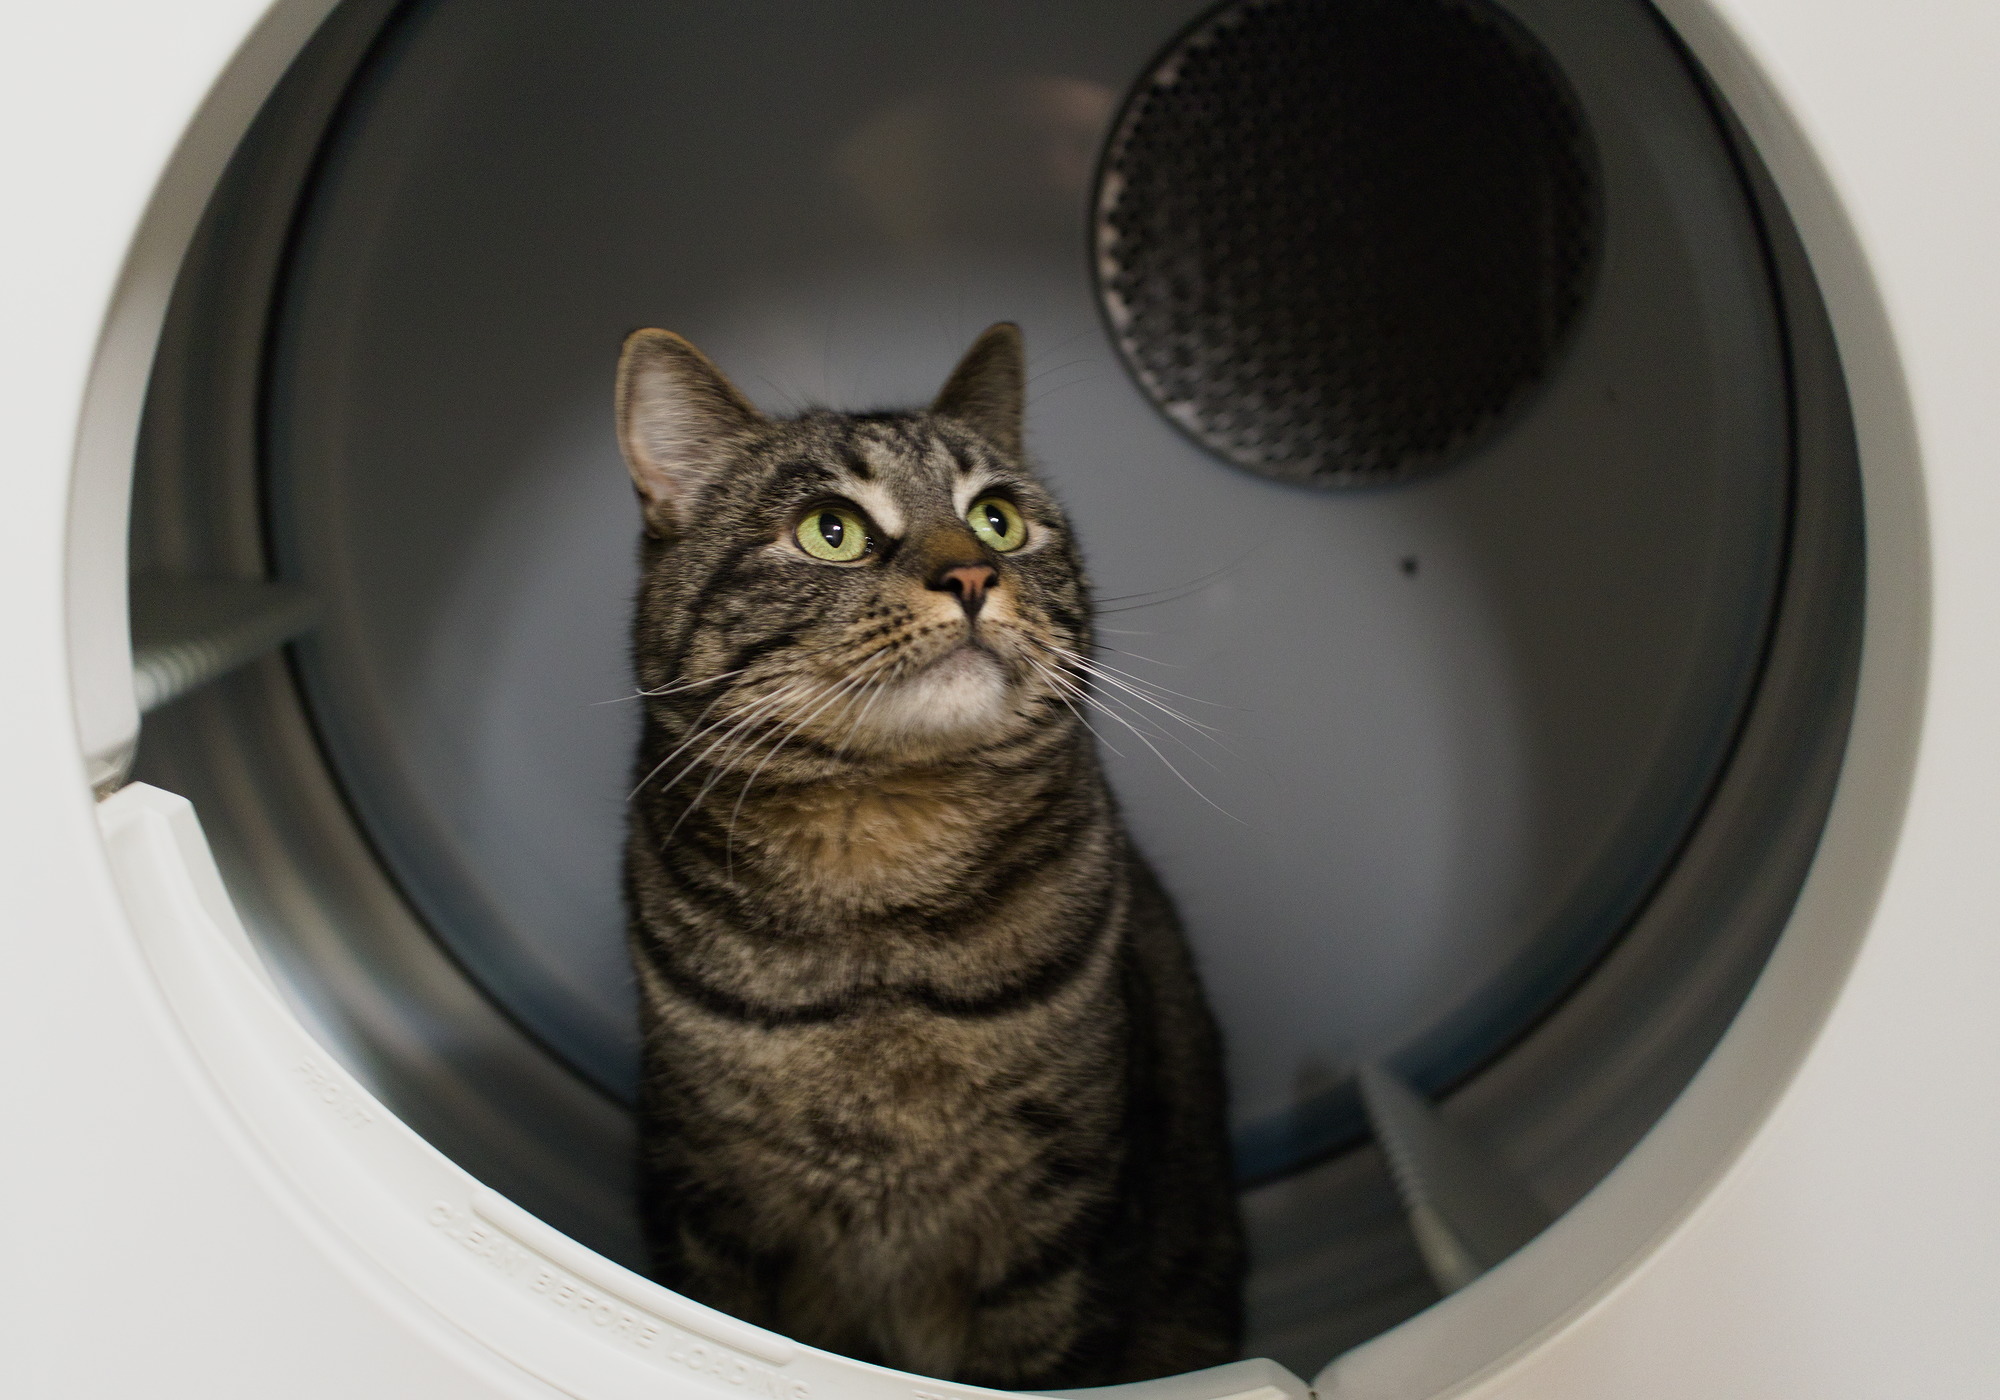 A grey tabby cat sitting in a dryer